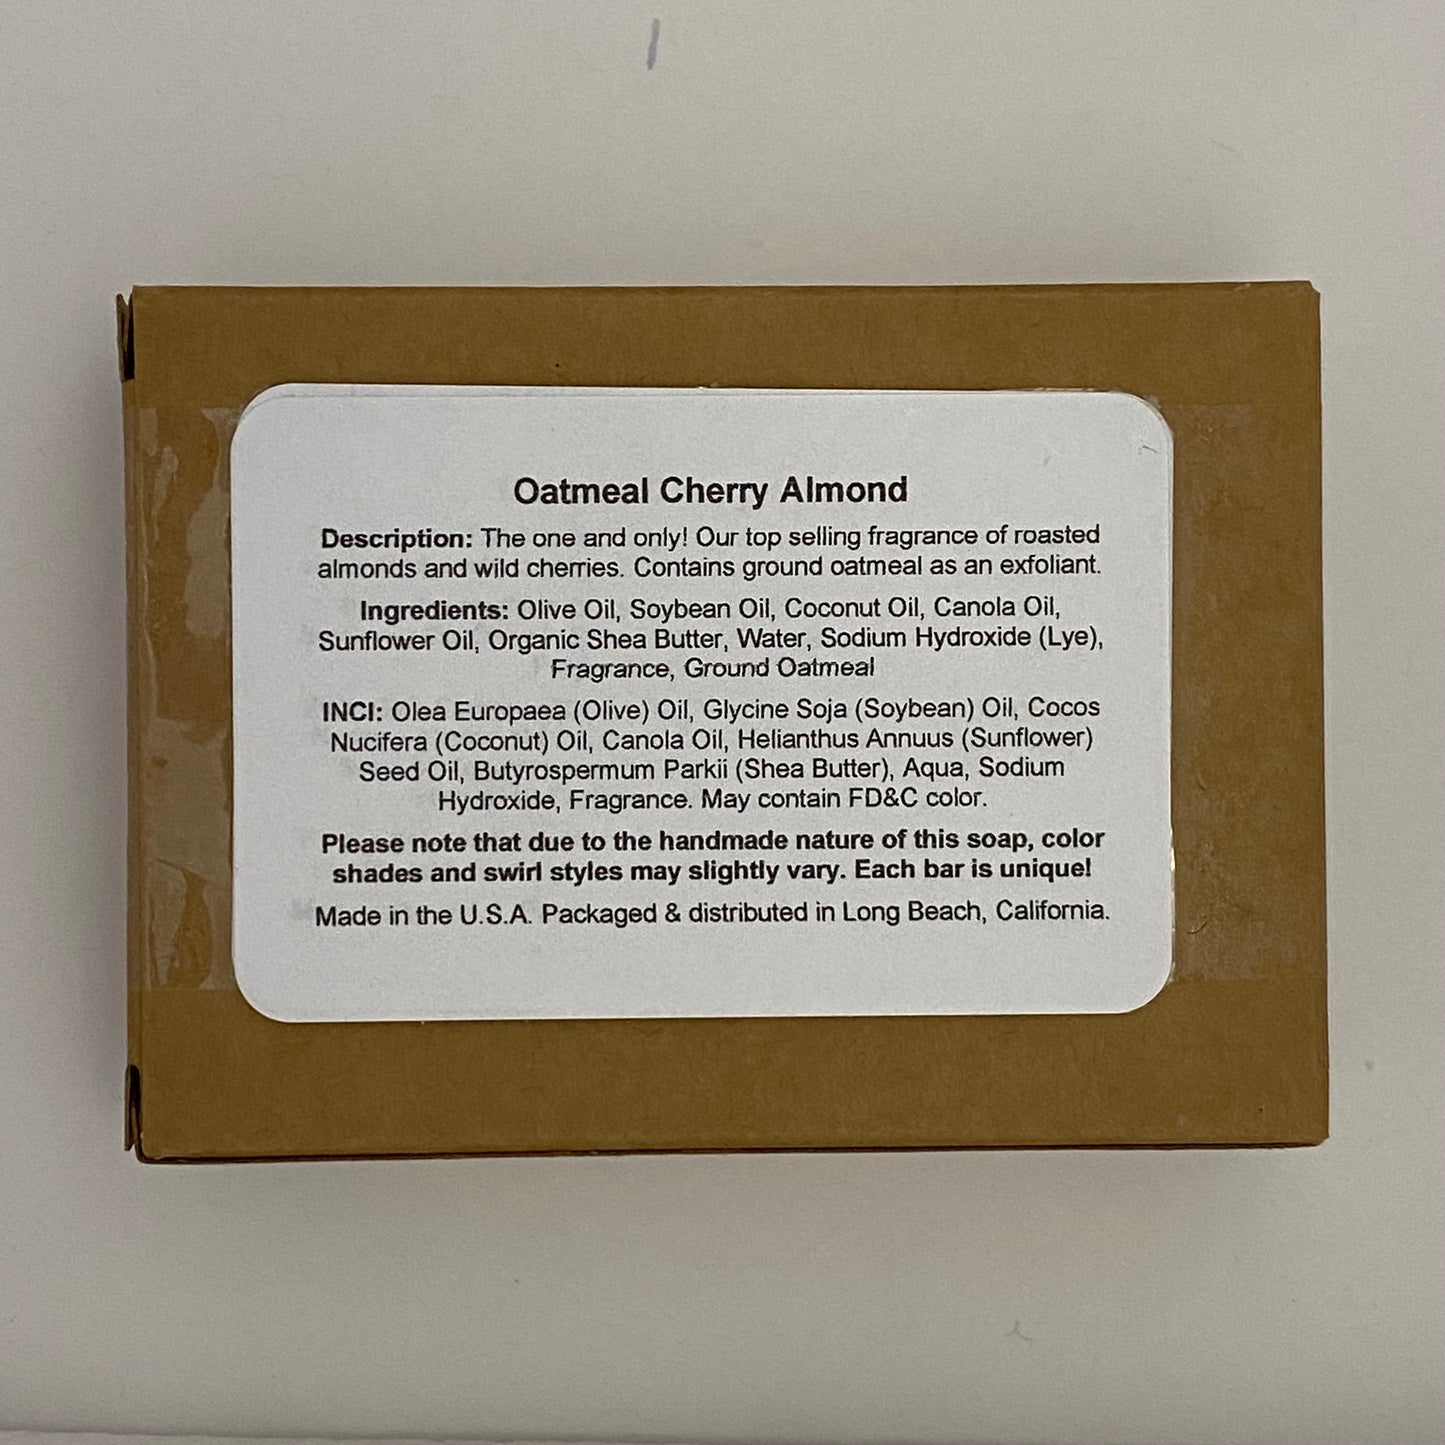 Oatmeal Cherry Almond, single bar